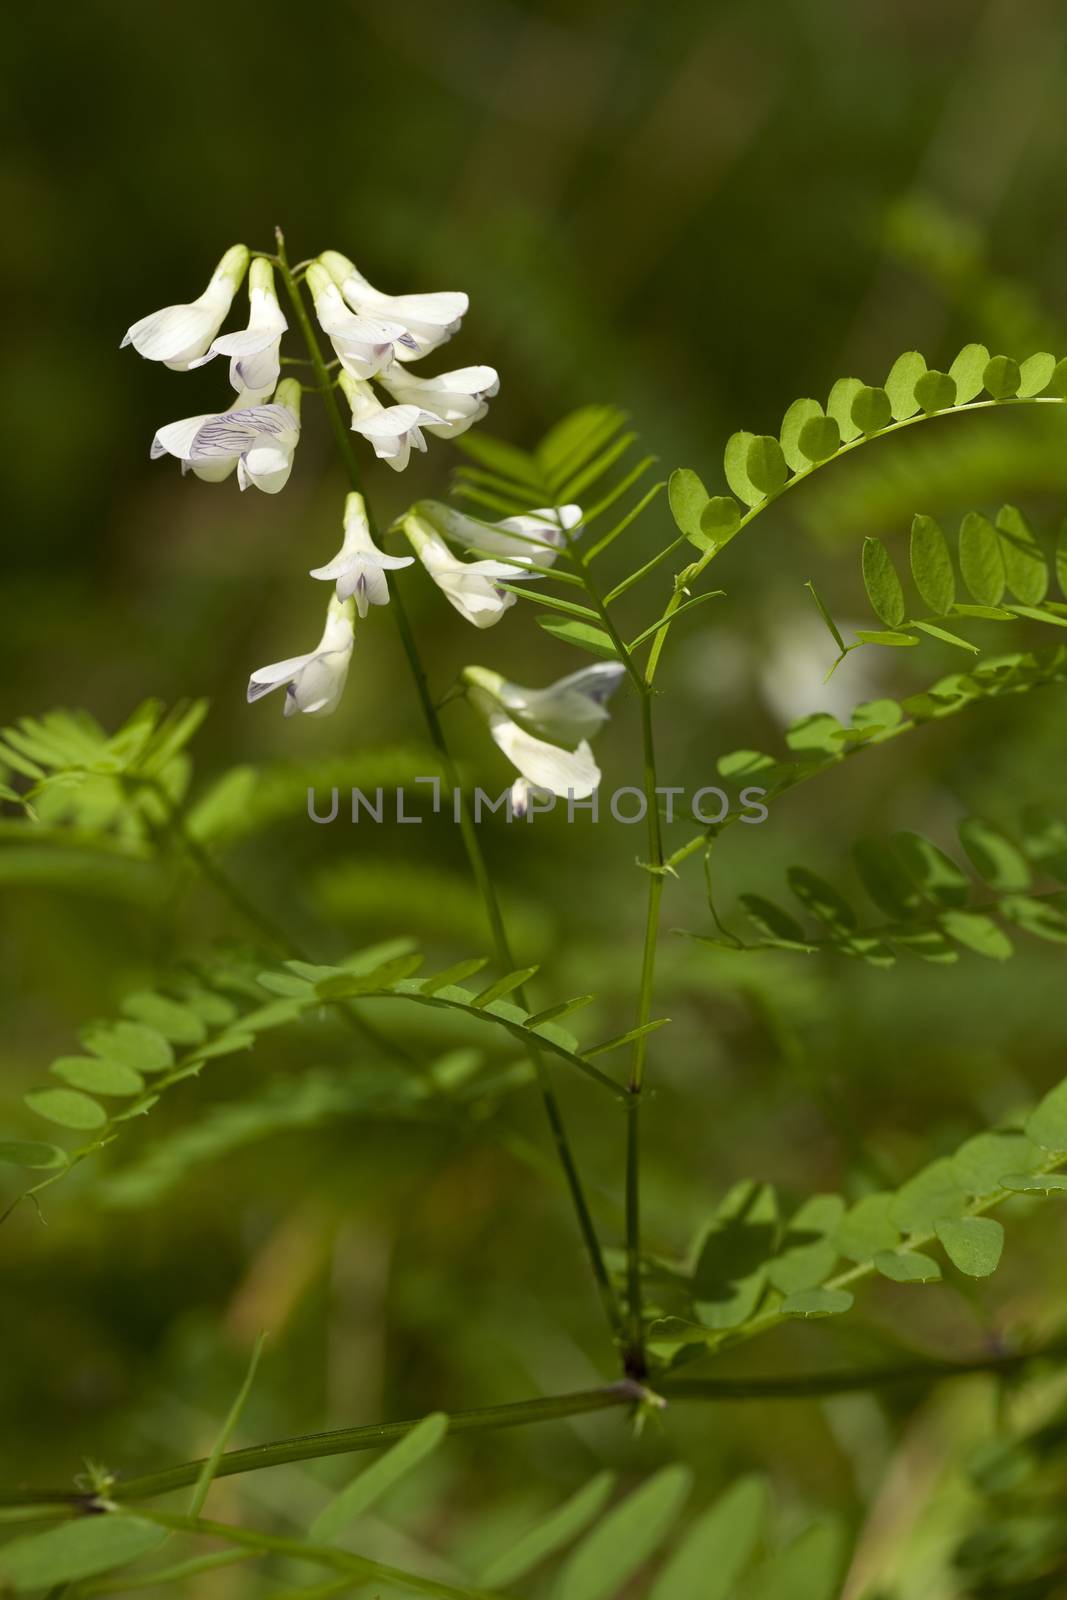 vetch inflorescence (Vicia sylvatica) on blurred background